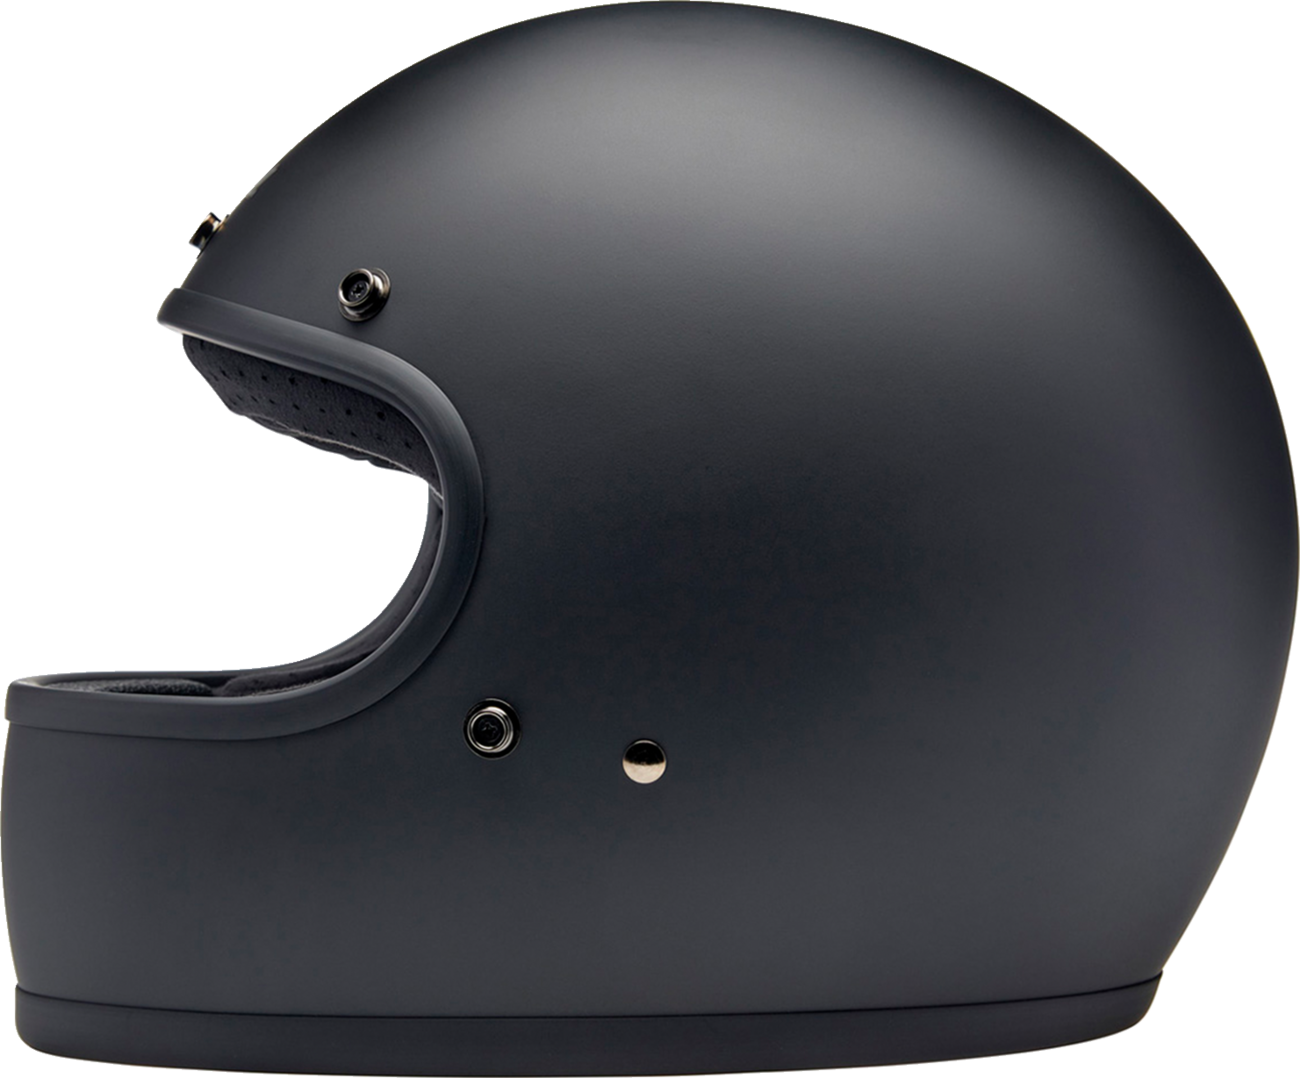 BILTWELL Gringo Helmet - Flat Black - Large 1002-201-504